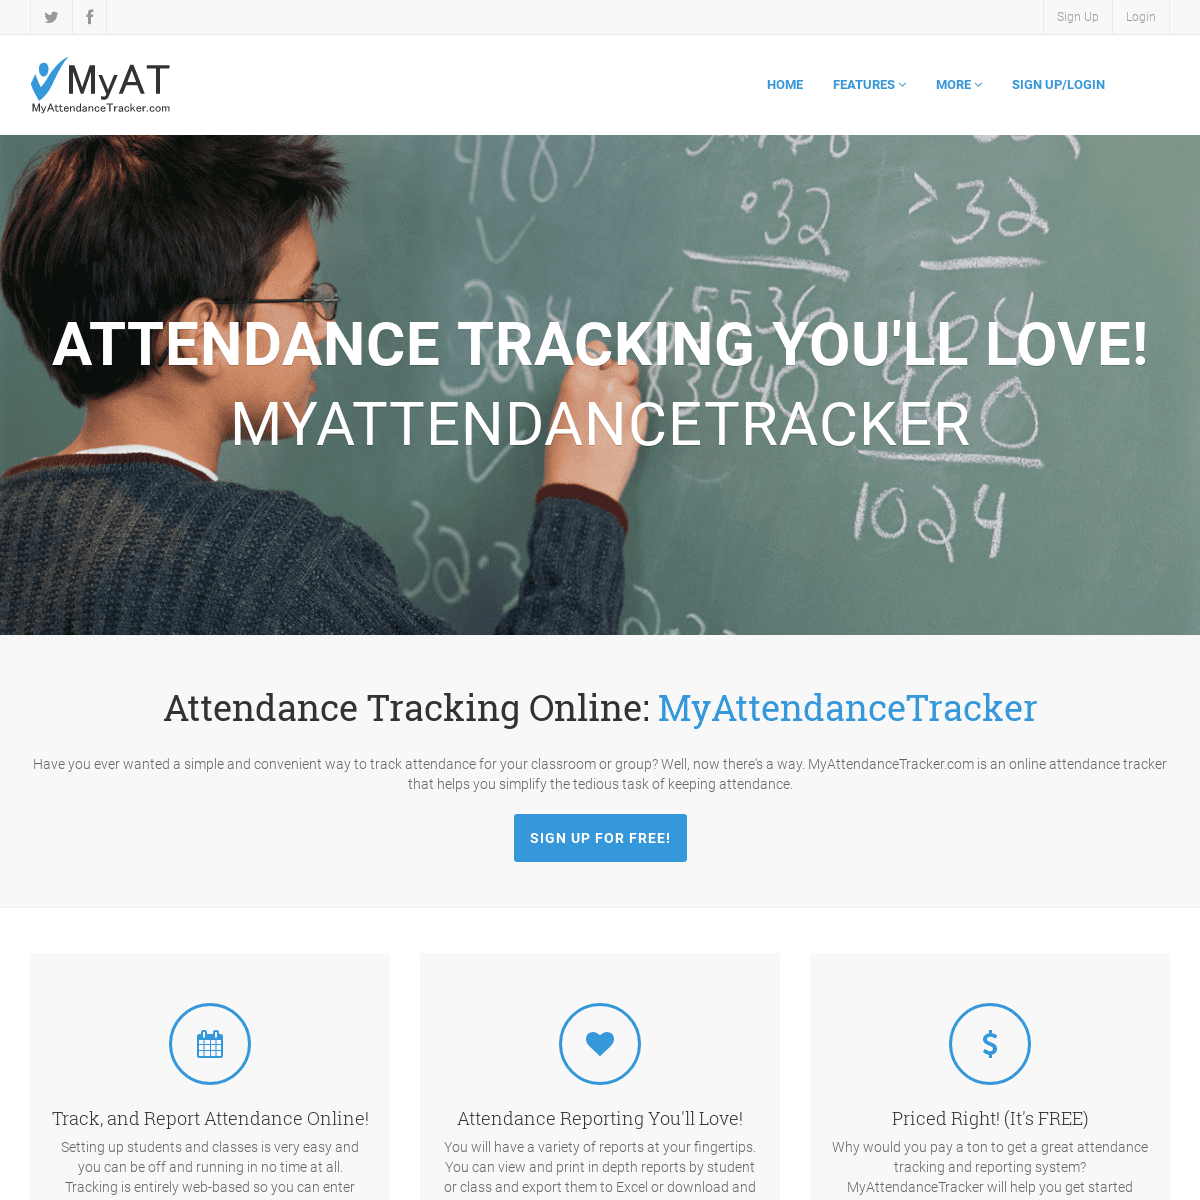 Attendance Tracking Software Online